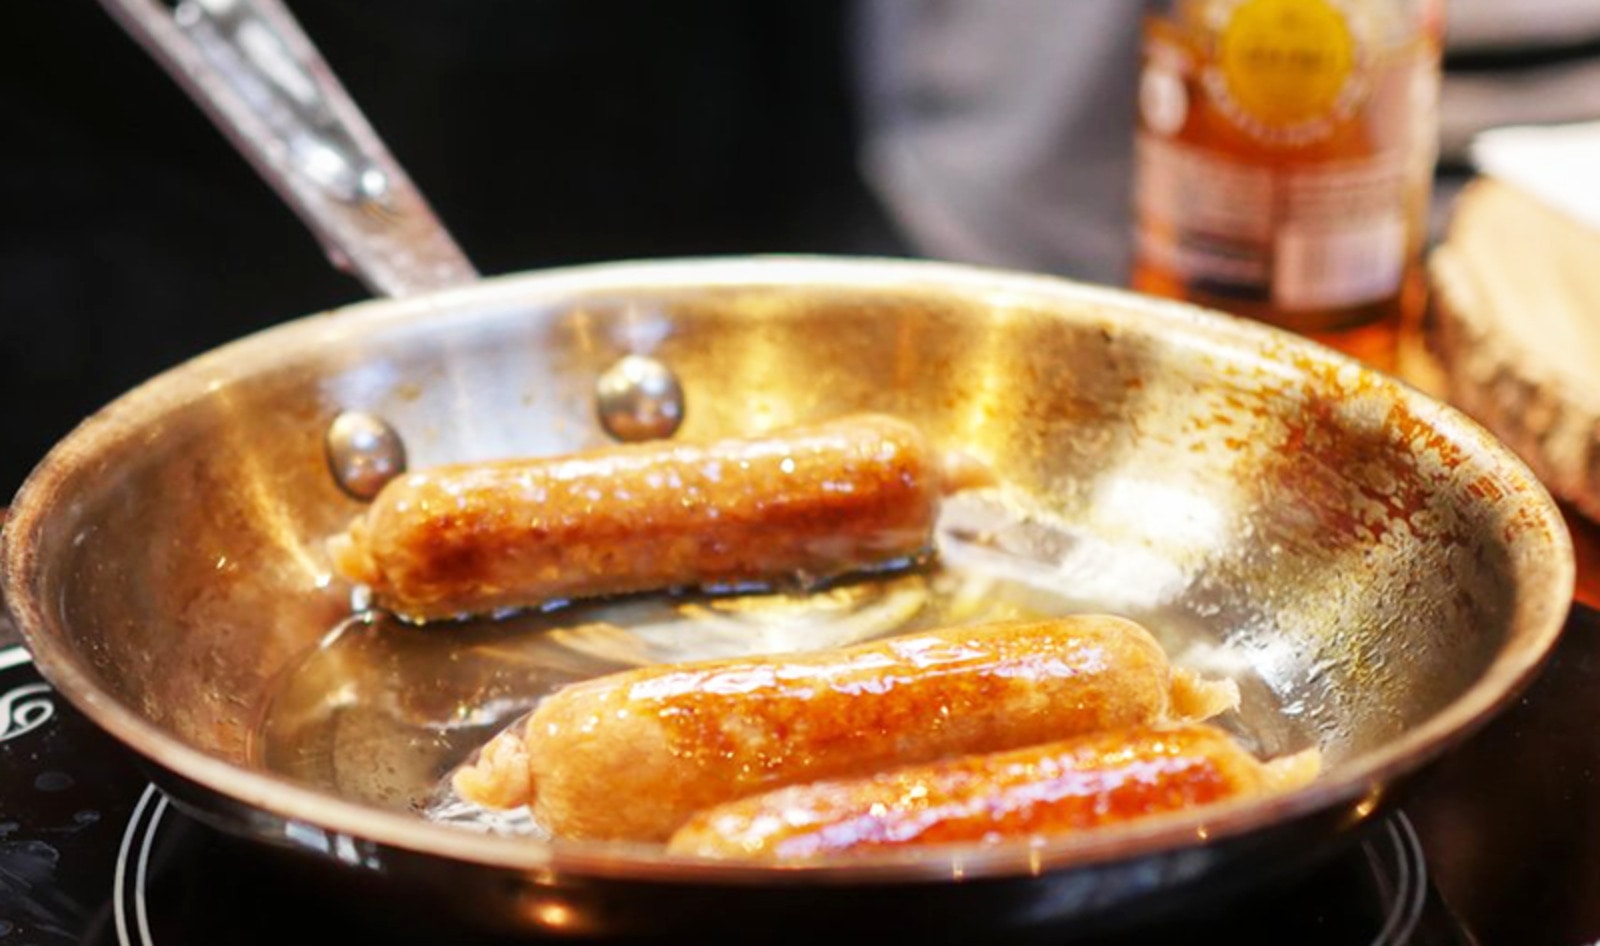 Two-Month-Old Startup Previews “Farm-Free” Pork Sausage